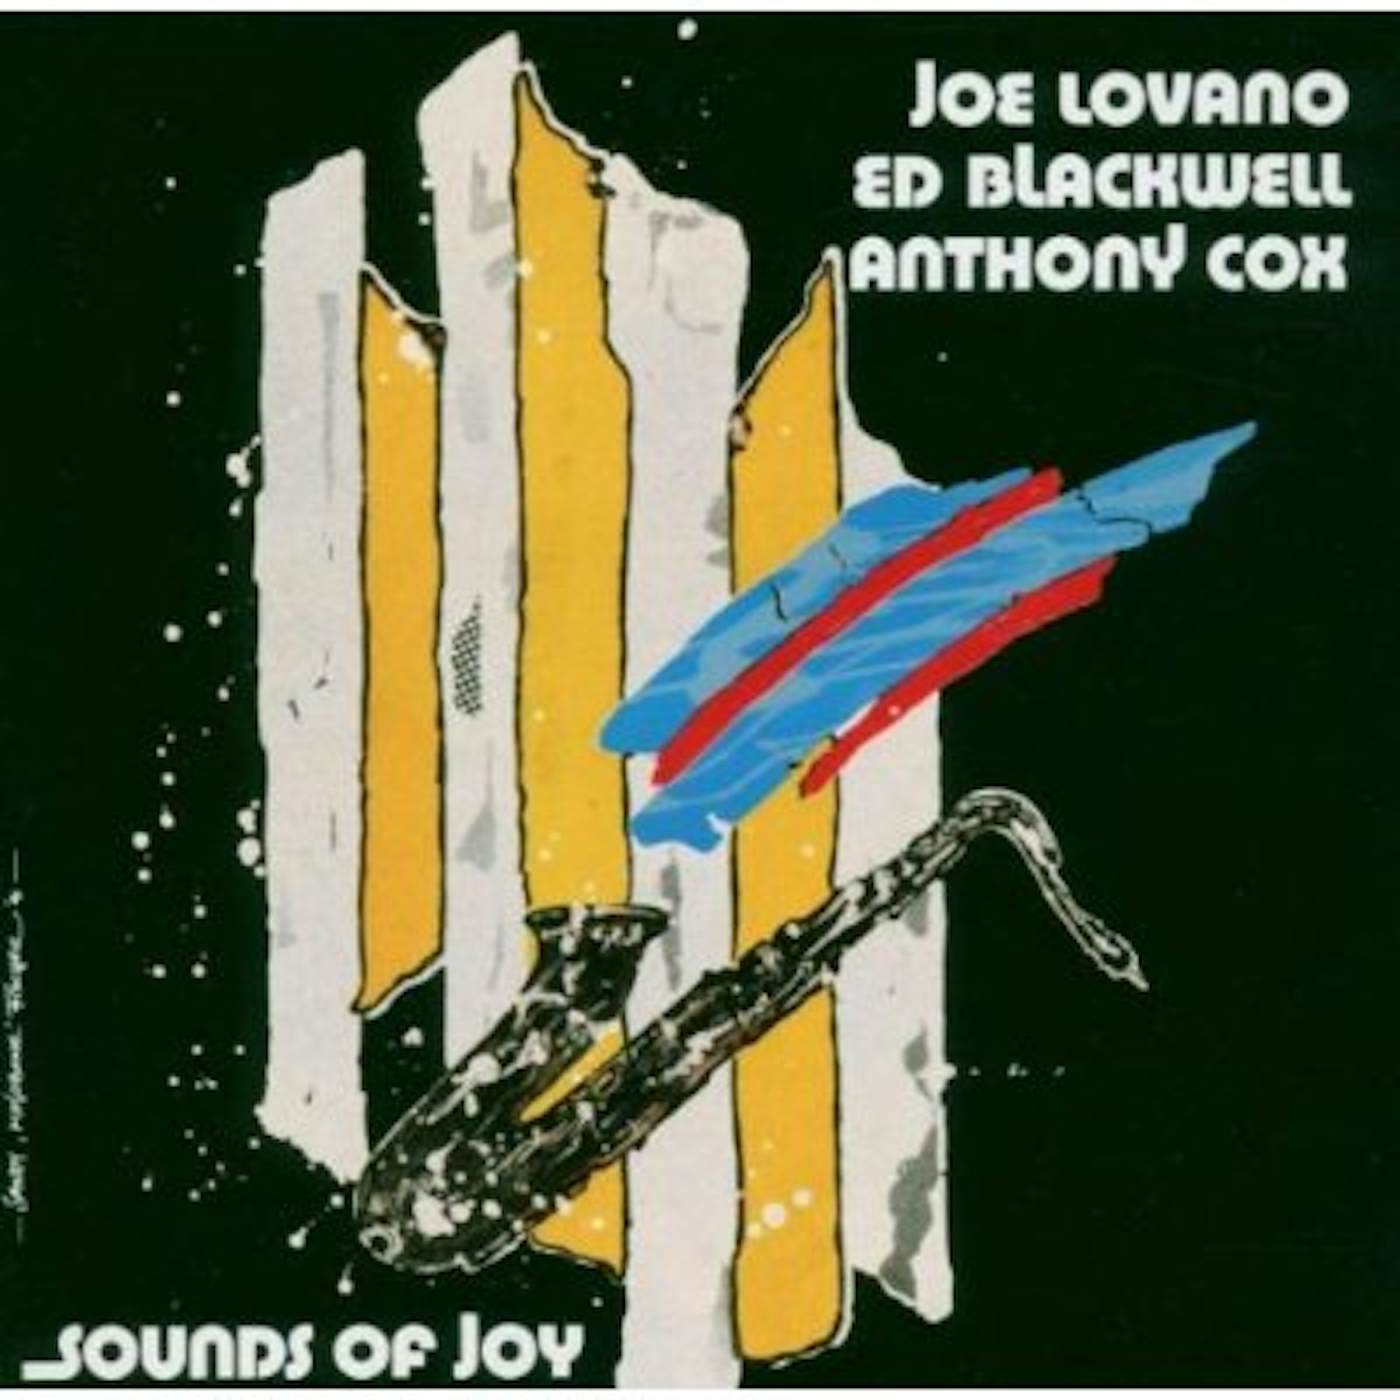 Joe Lovano SOUNDS OF JOY CD